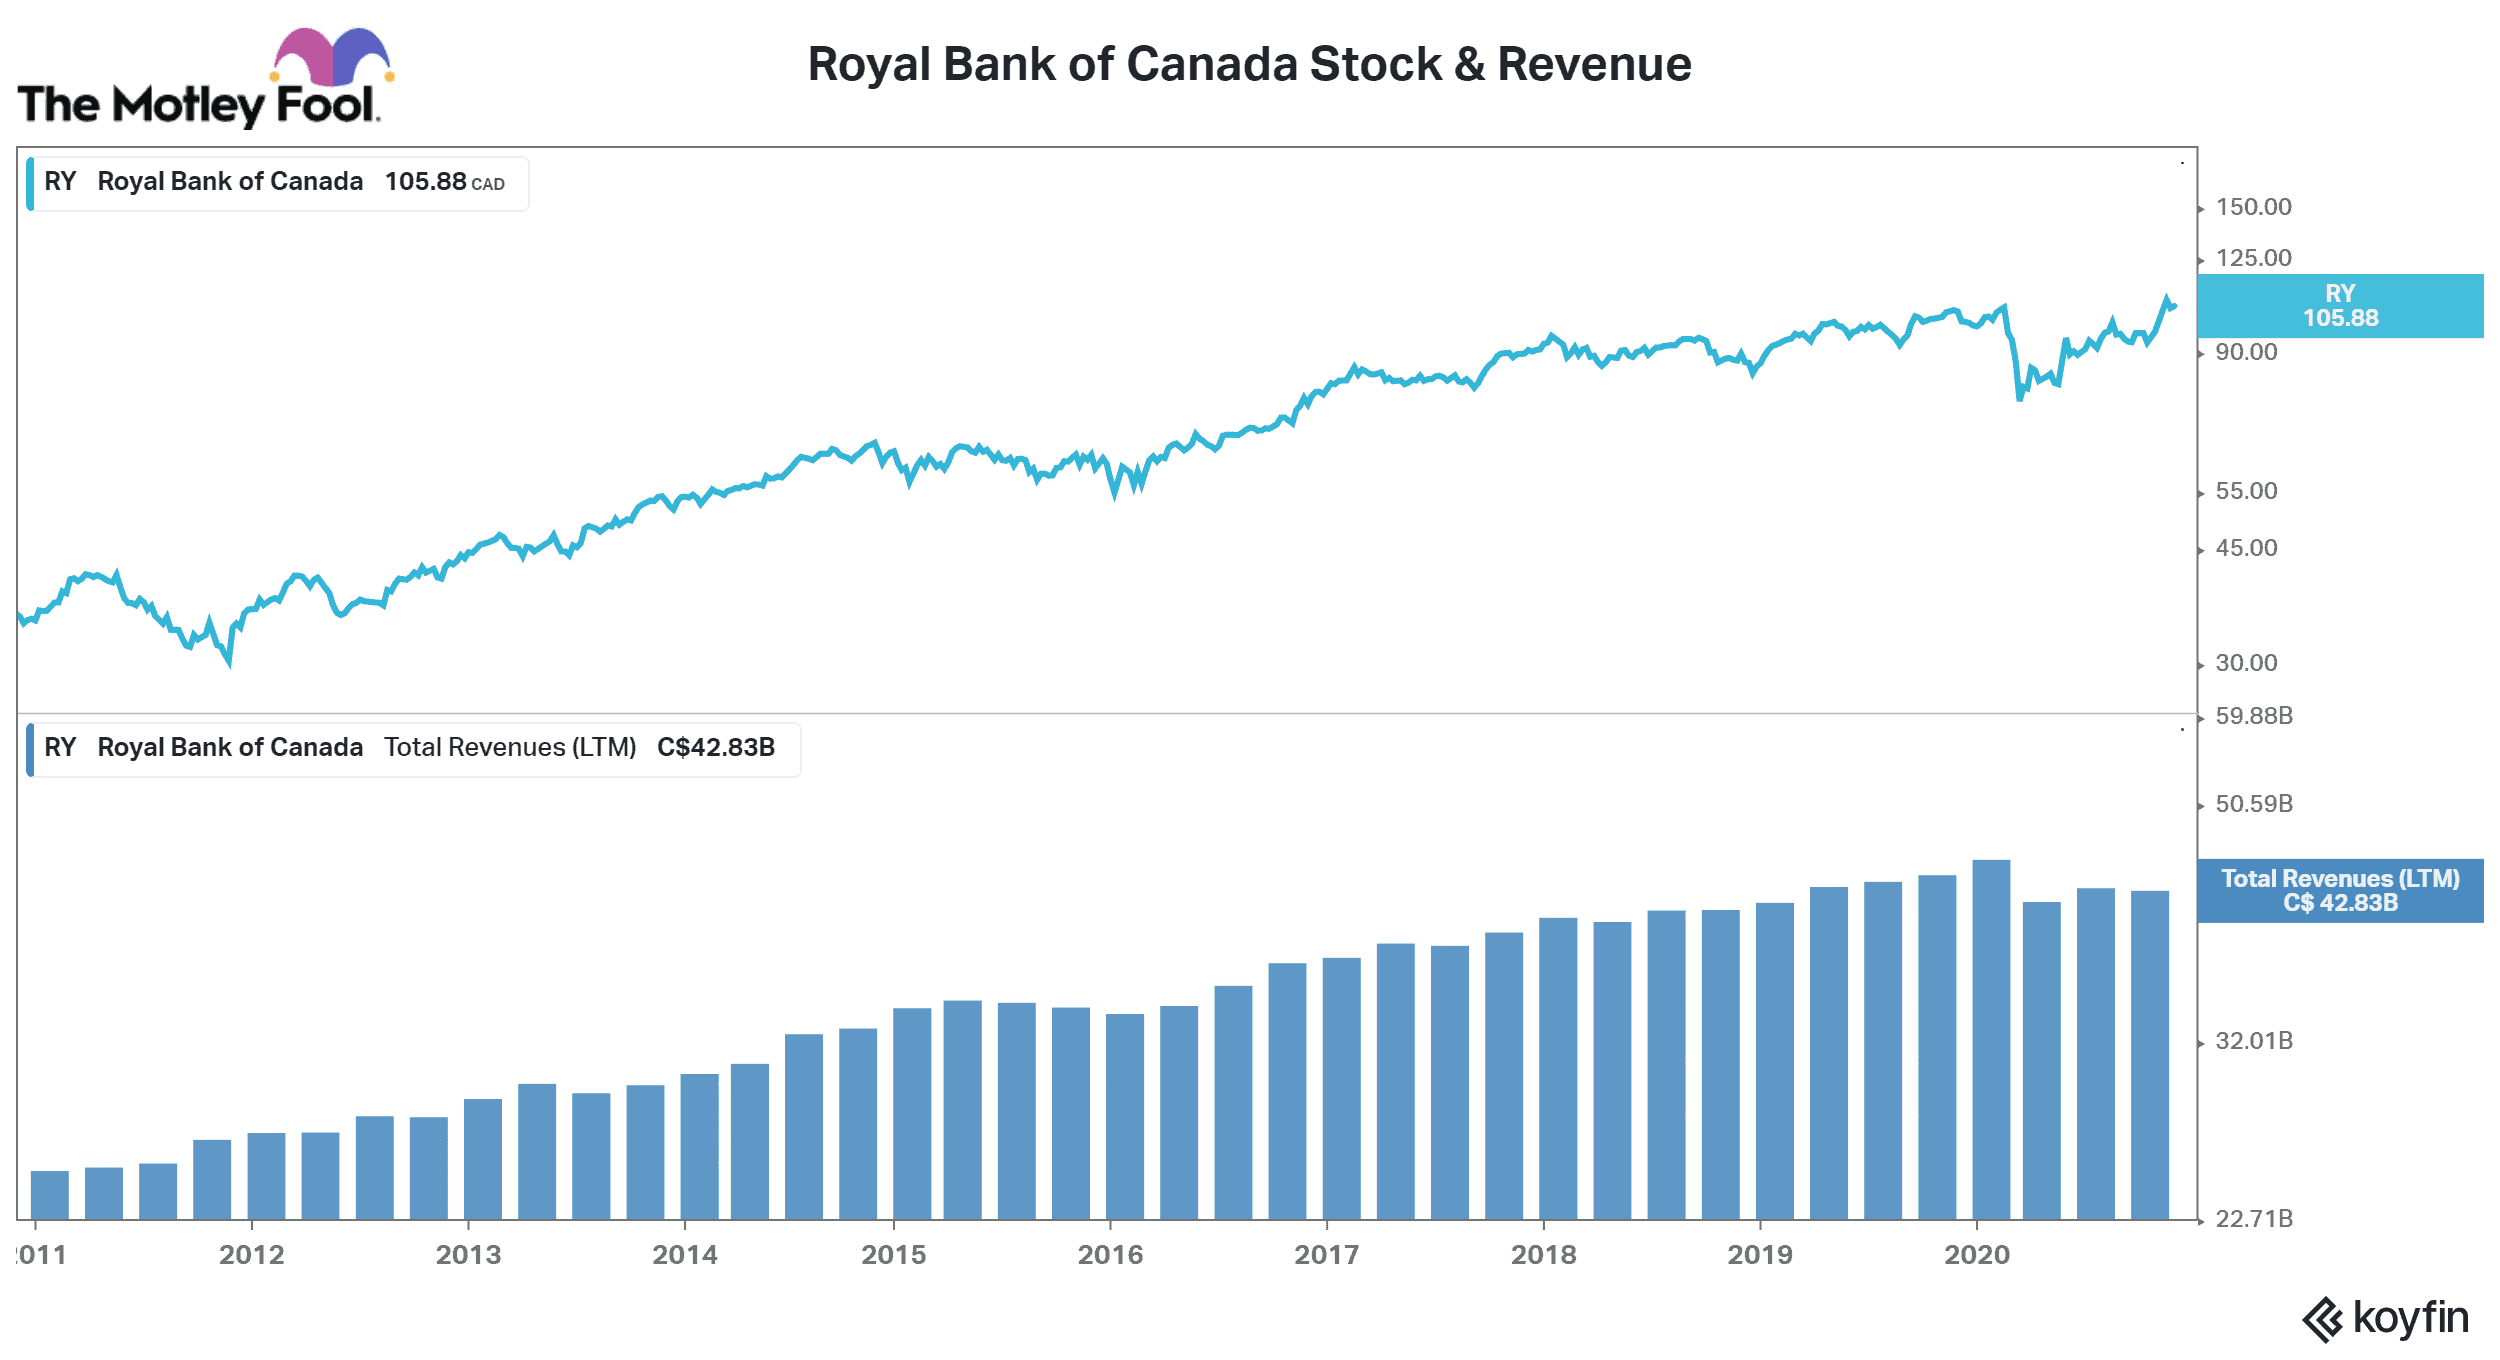 Royal Bank of Canada Stock & Revenue